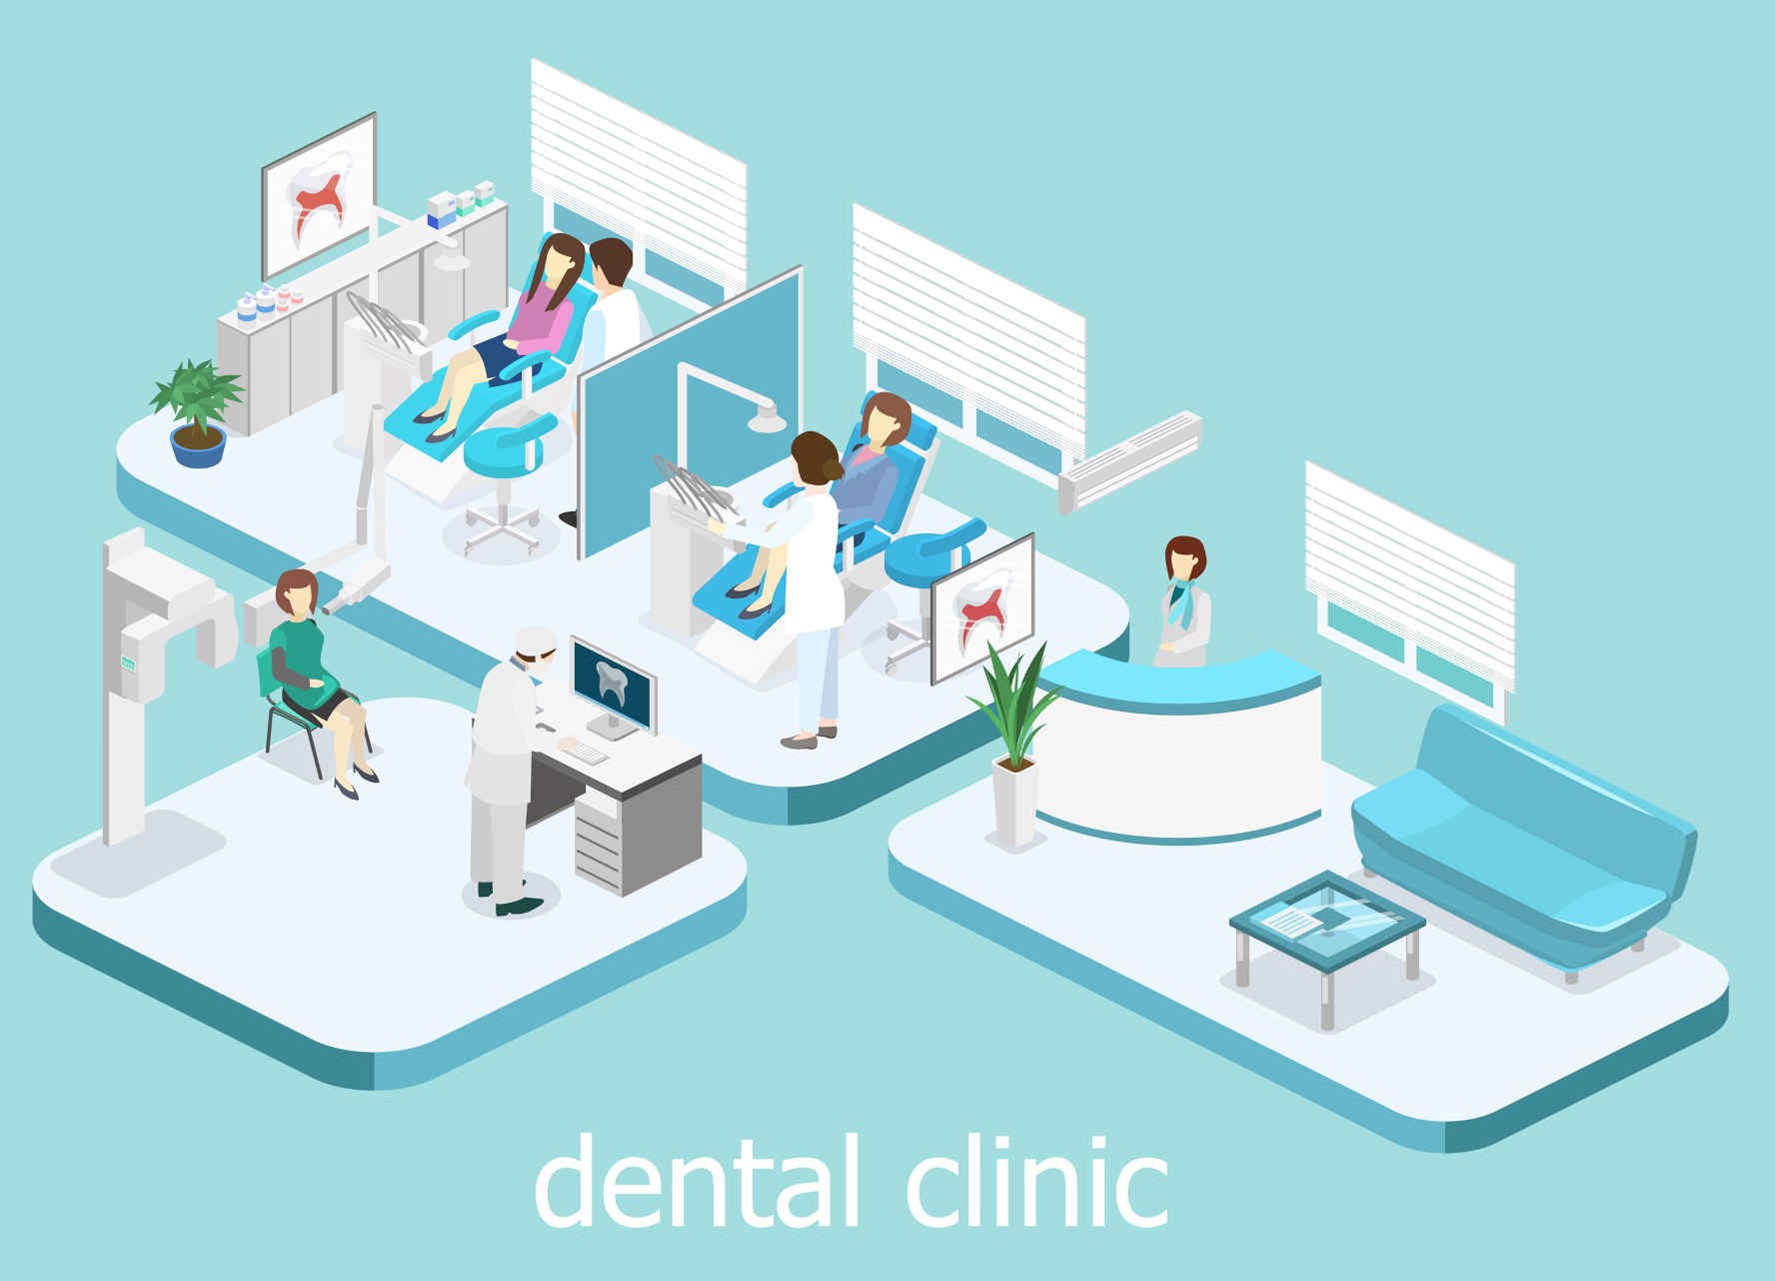 Vector illustration of a dental clinic